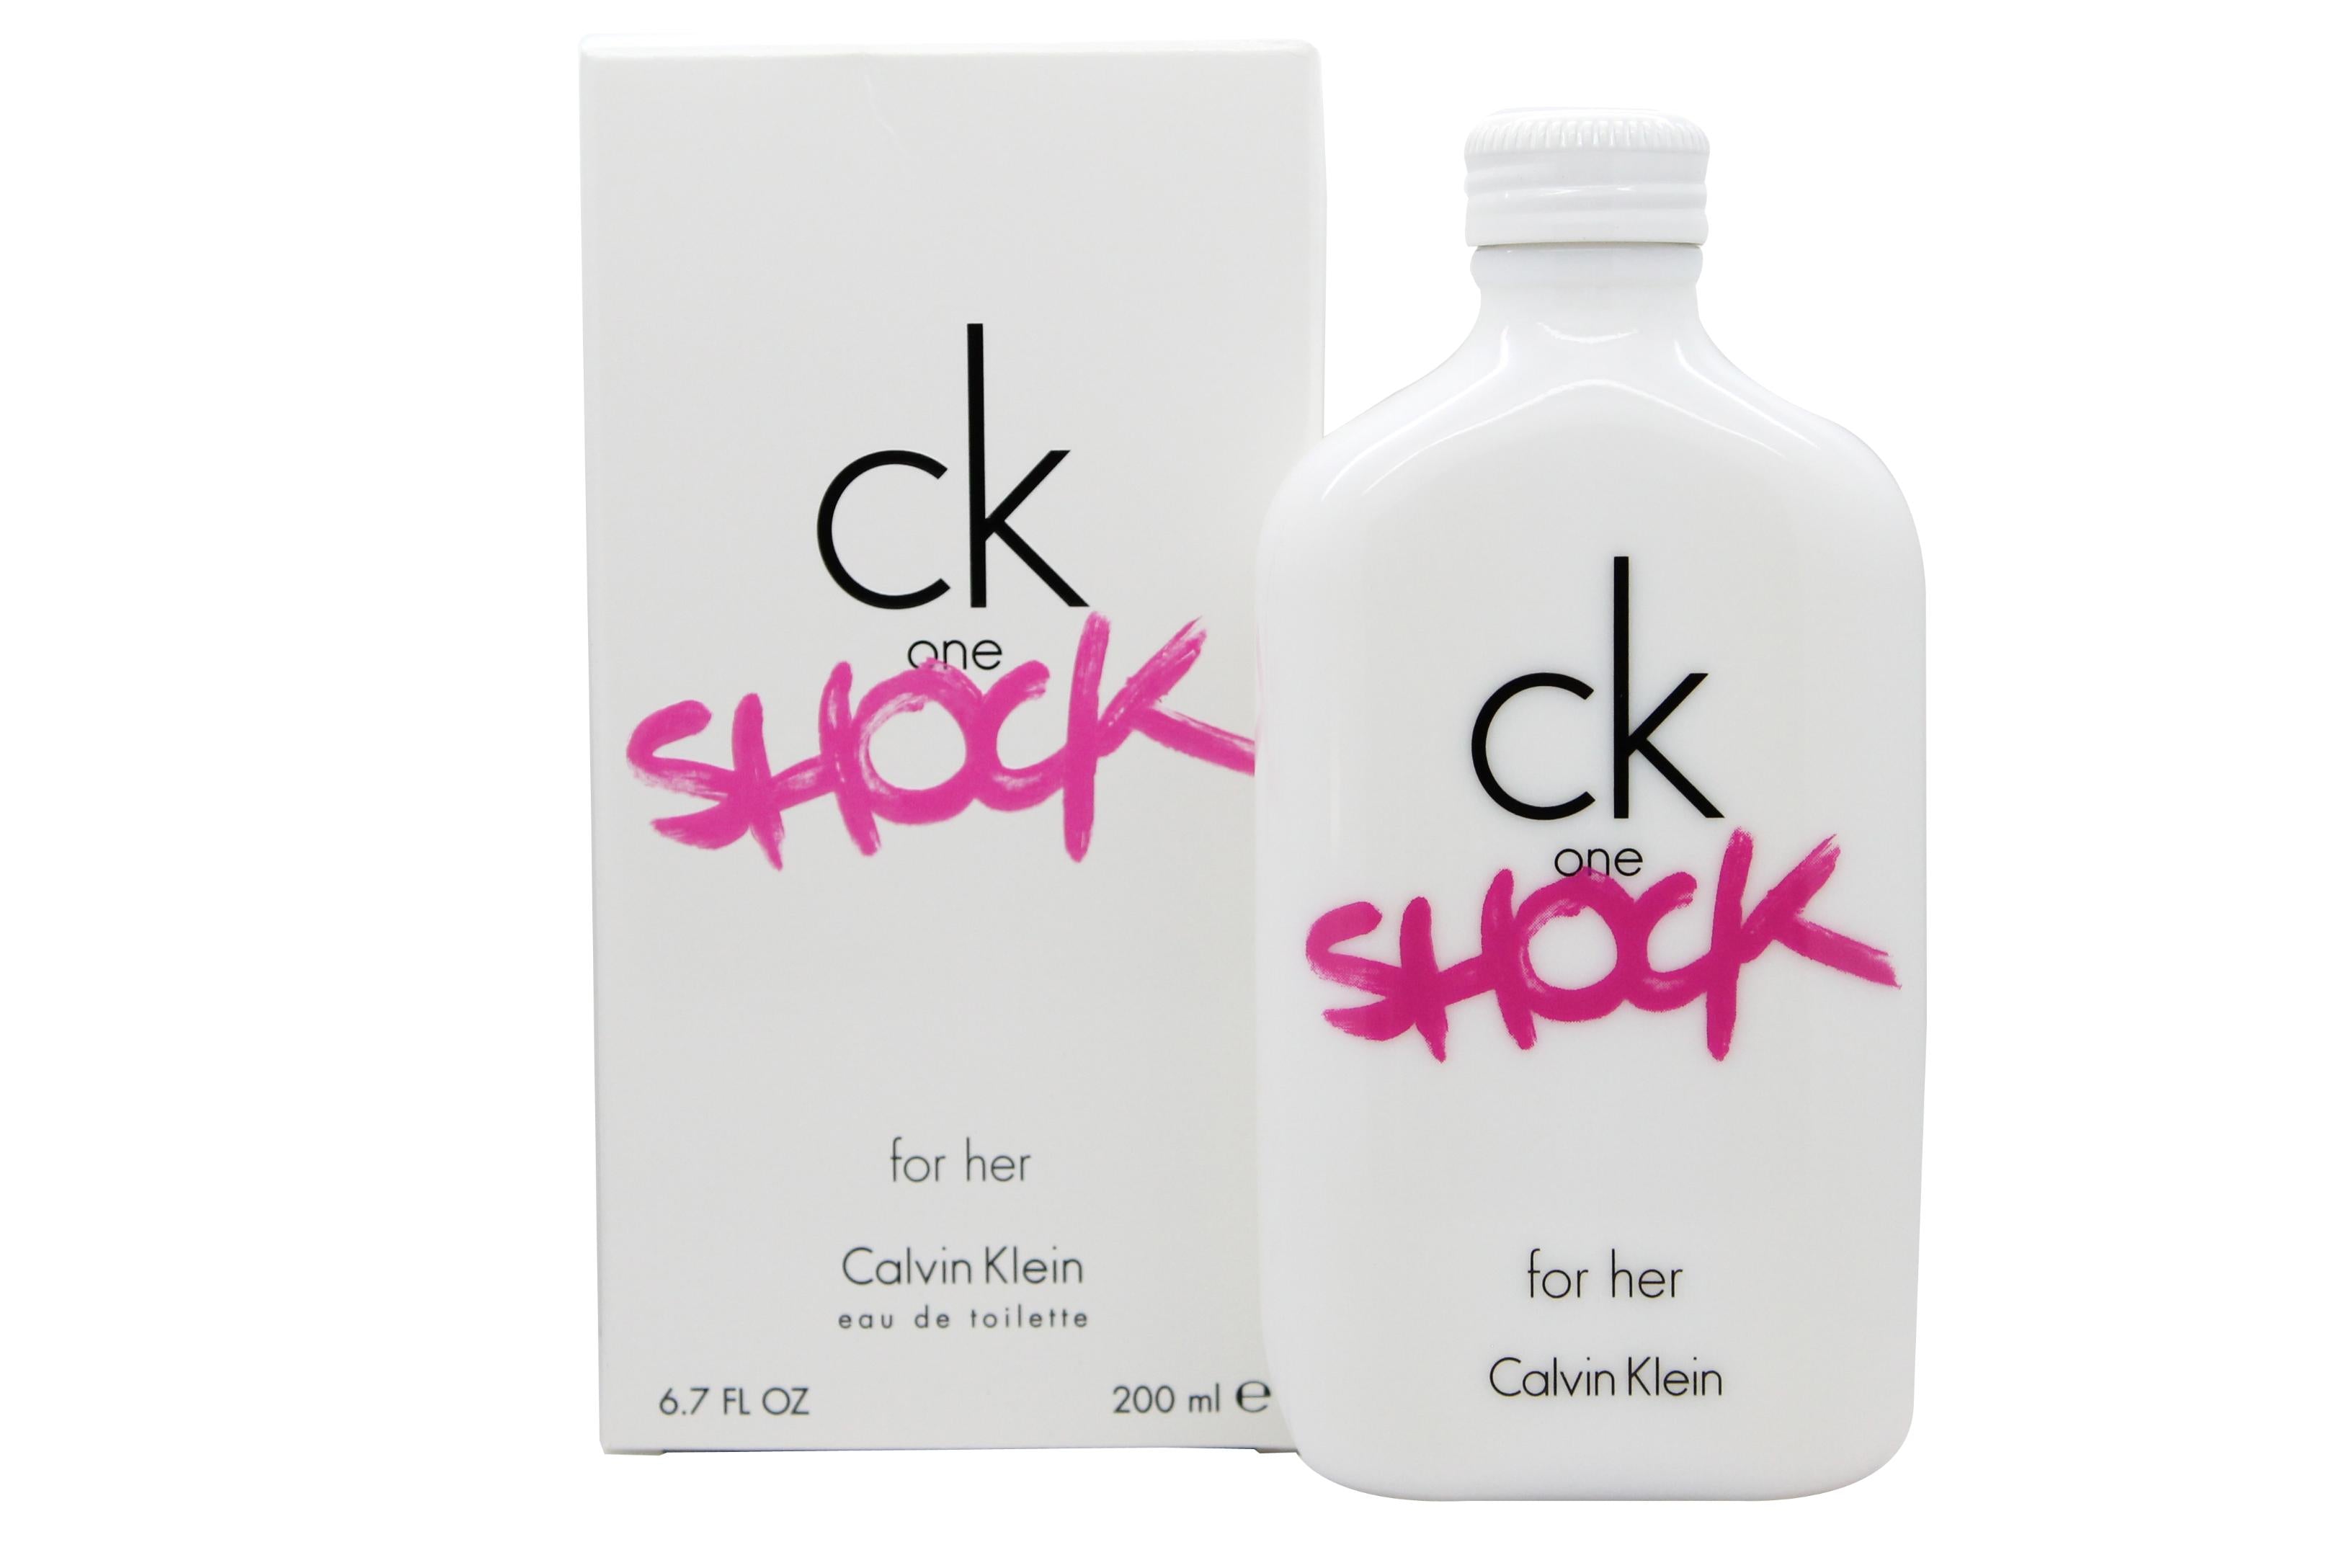 View Calvin Klein CK One Shock Eau de Toilette 200ml Spray information